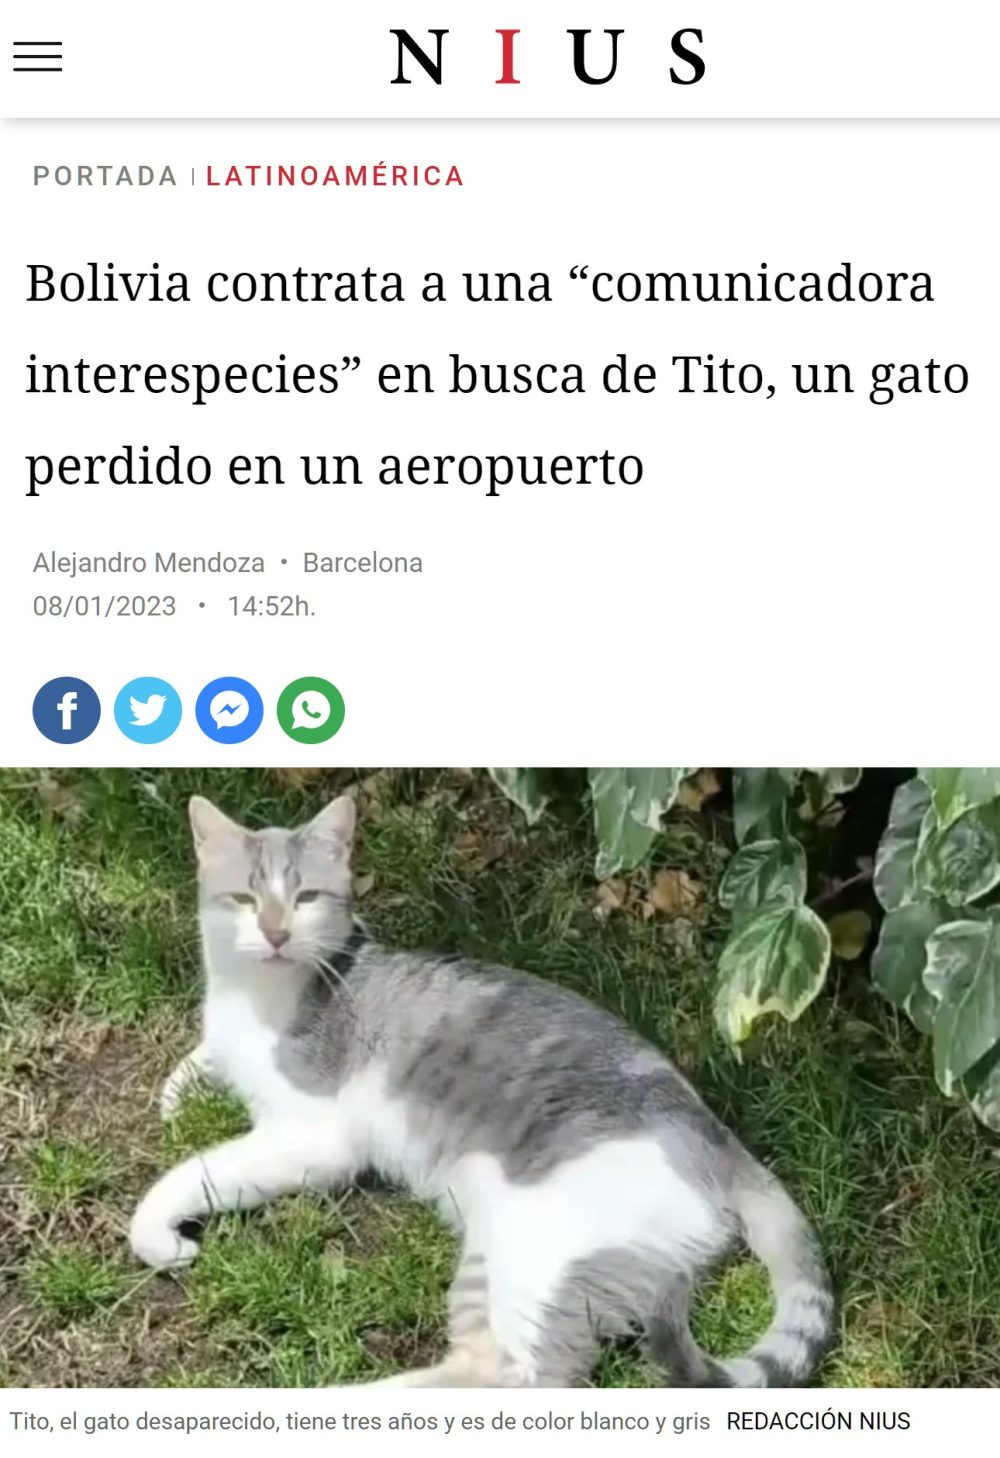 Bolivia ficha a una "comunicadora interespecies" para que busque a un gato perdido en un aeropuerto usando la "conexión de energías"